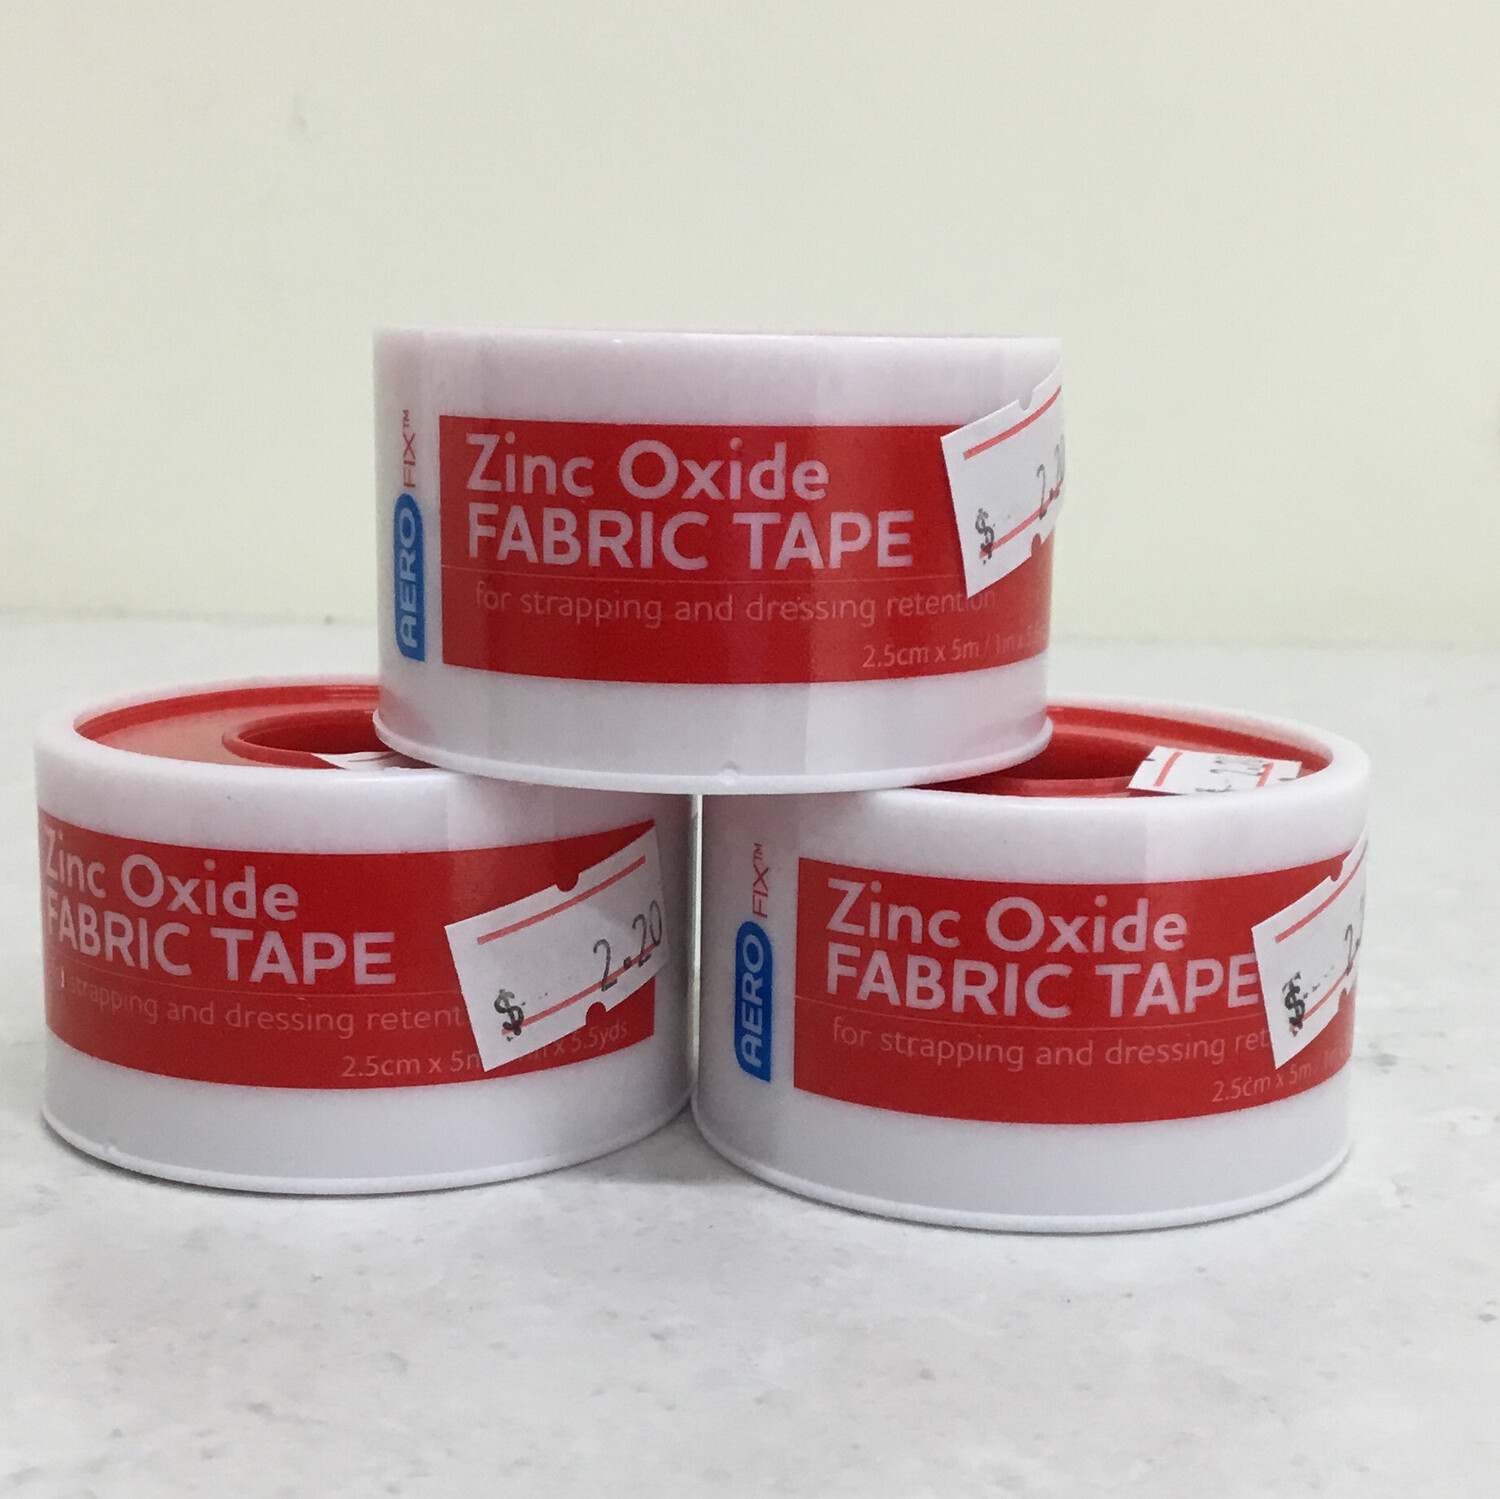 Zinc Oxide Fabric Tape